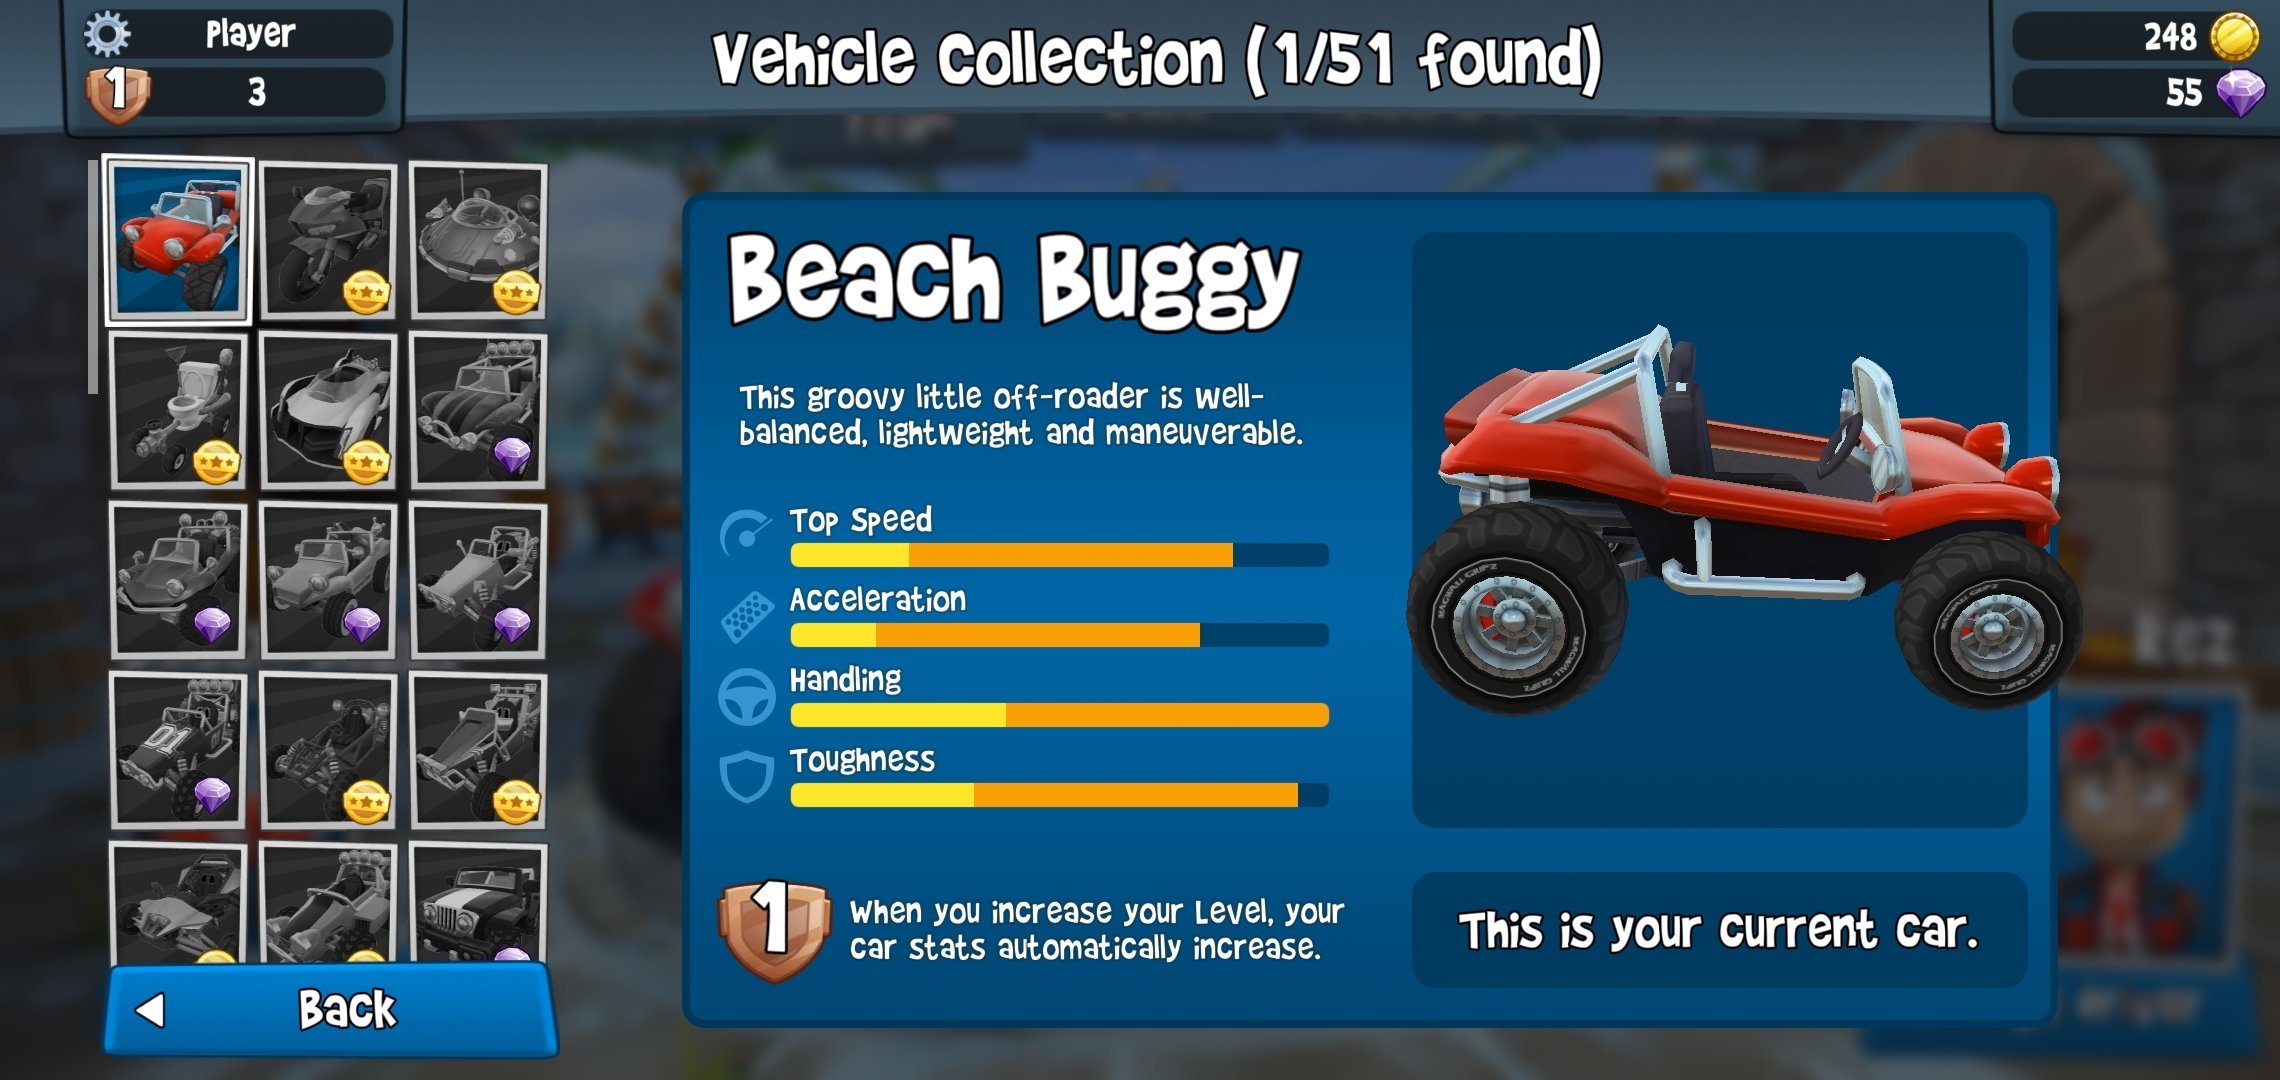 cuando saldra beach buggy racing 2